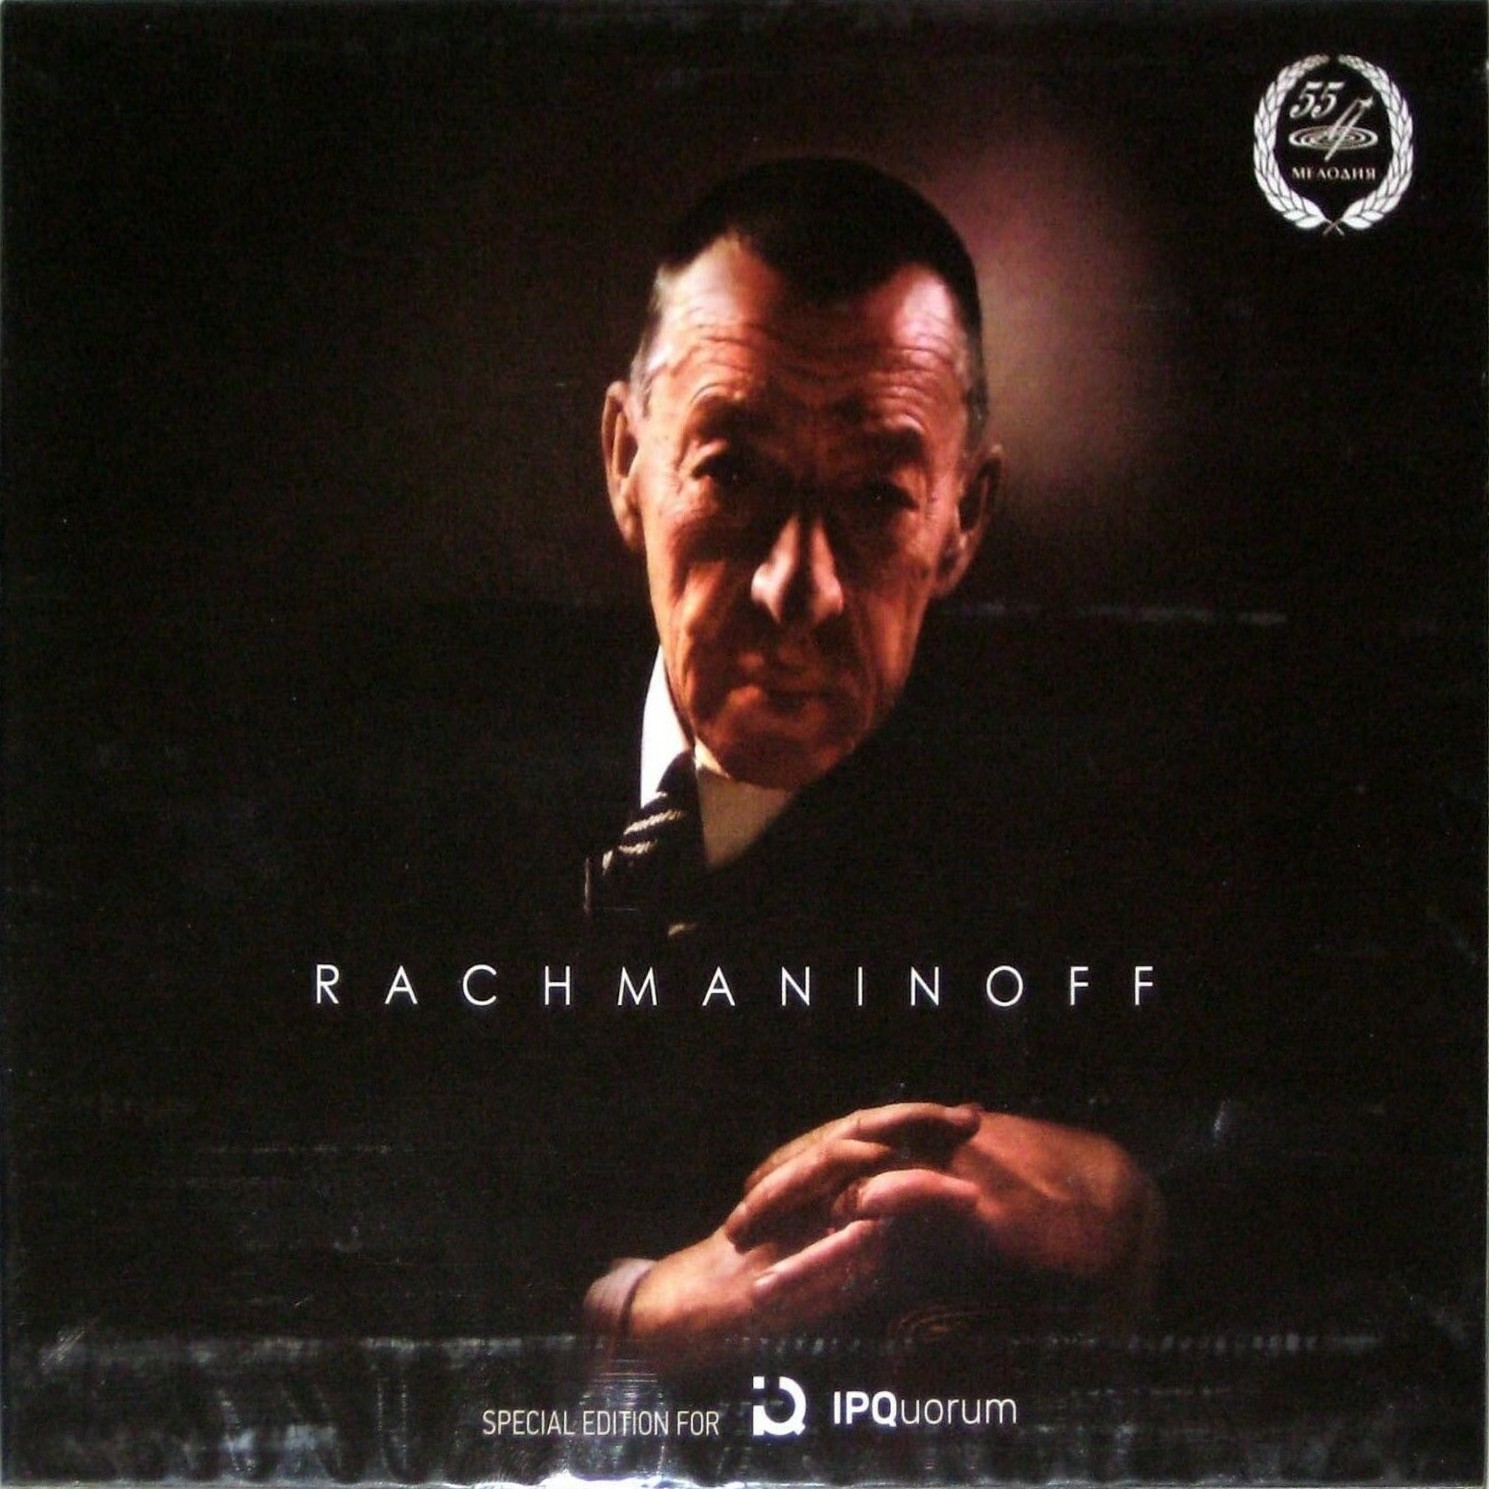 Rachmaninoff (special edition for IPQuorum)